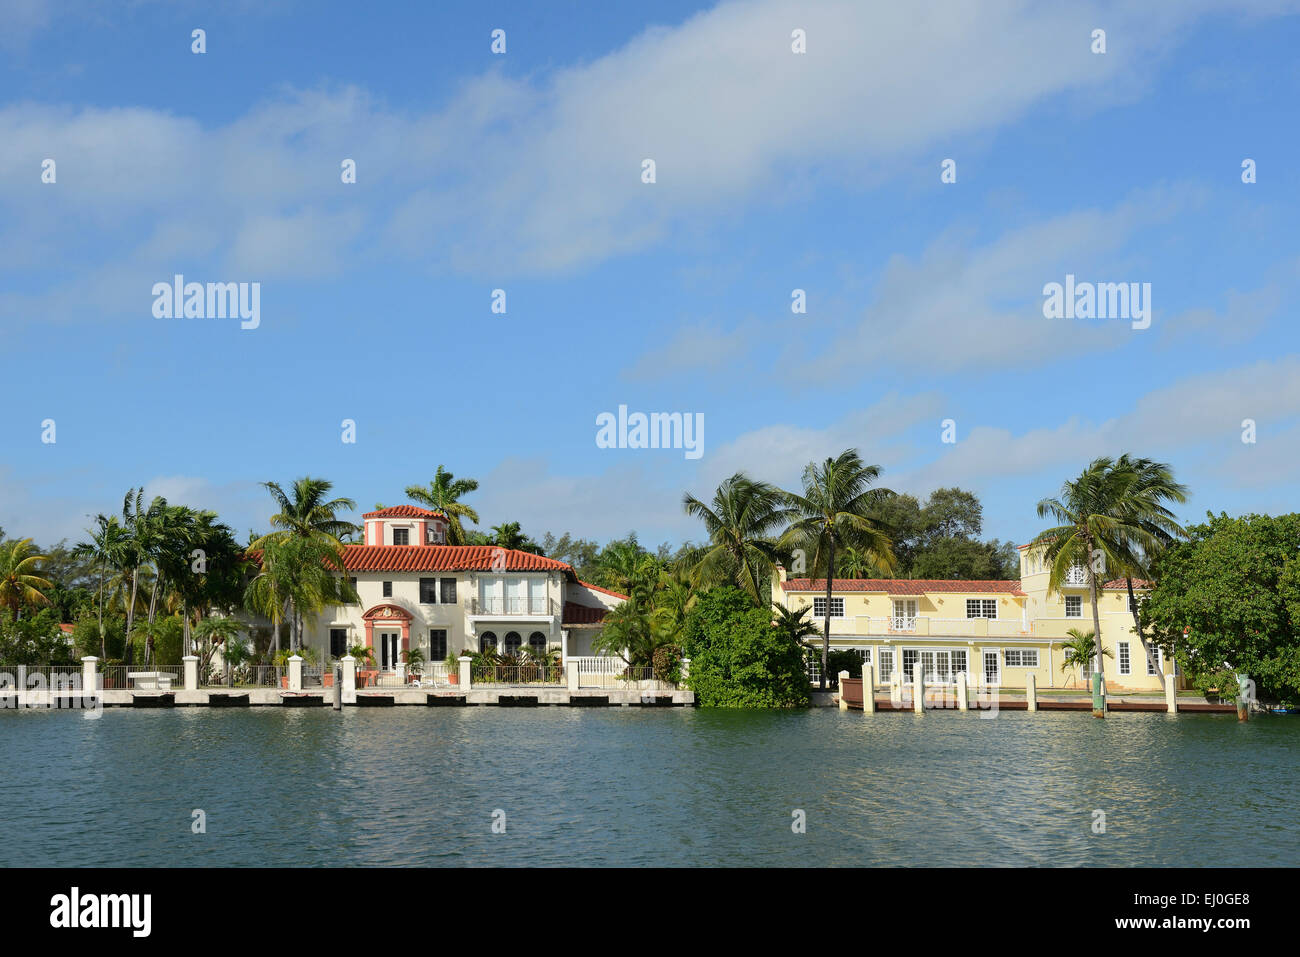 USA, Florida, Dade County, Miami Beach, Mansions along waterway Stock Photo